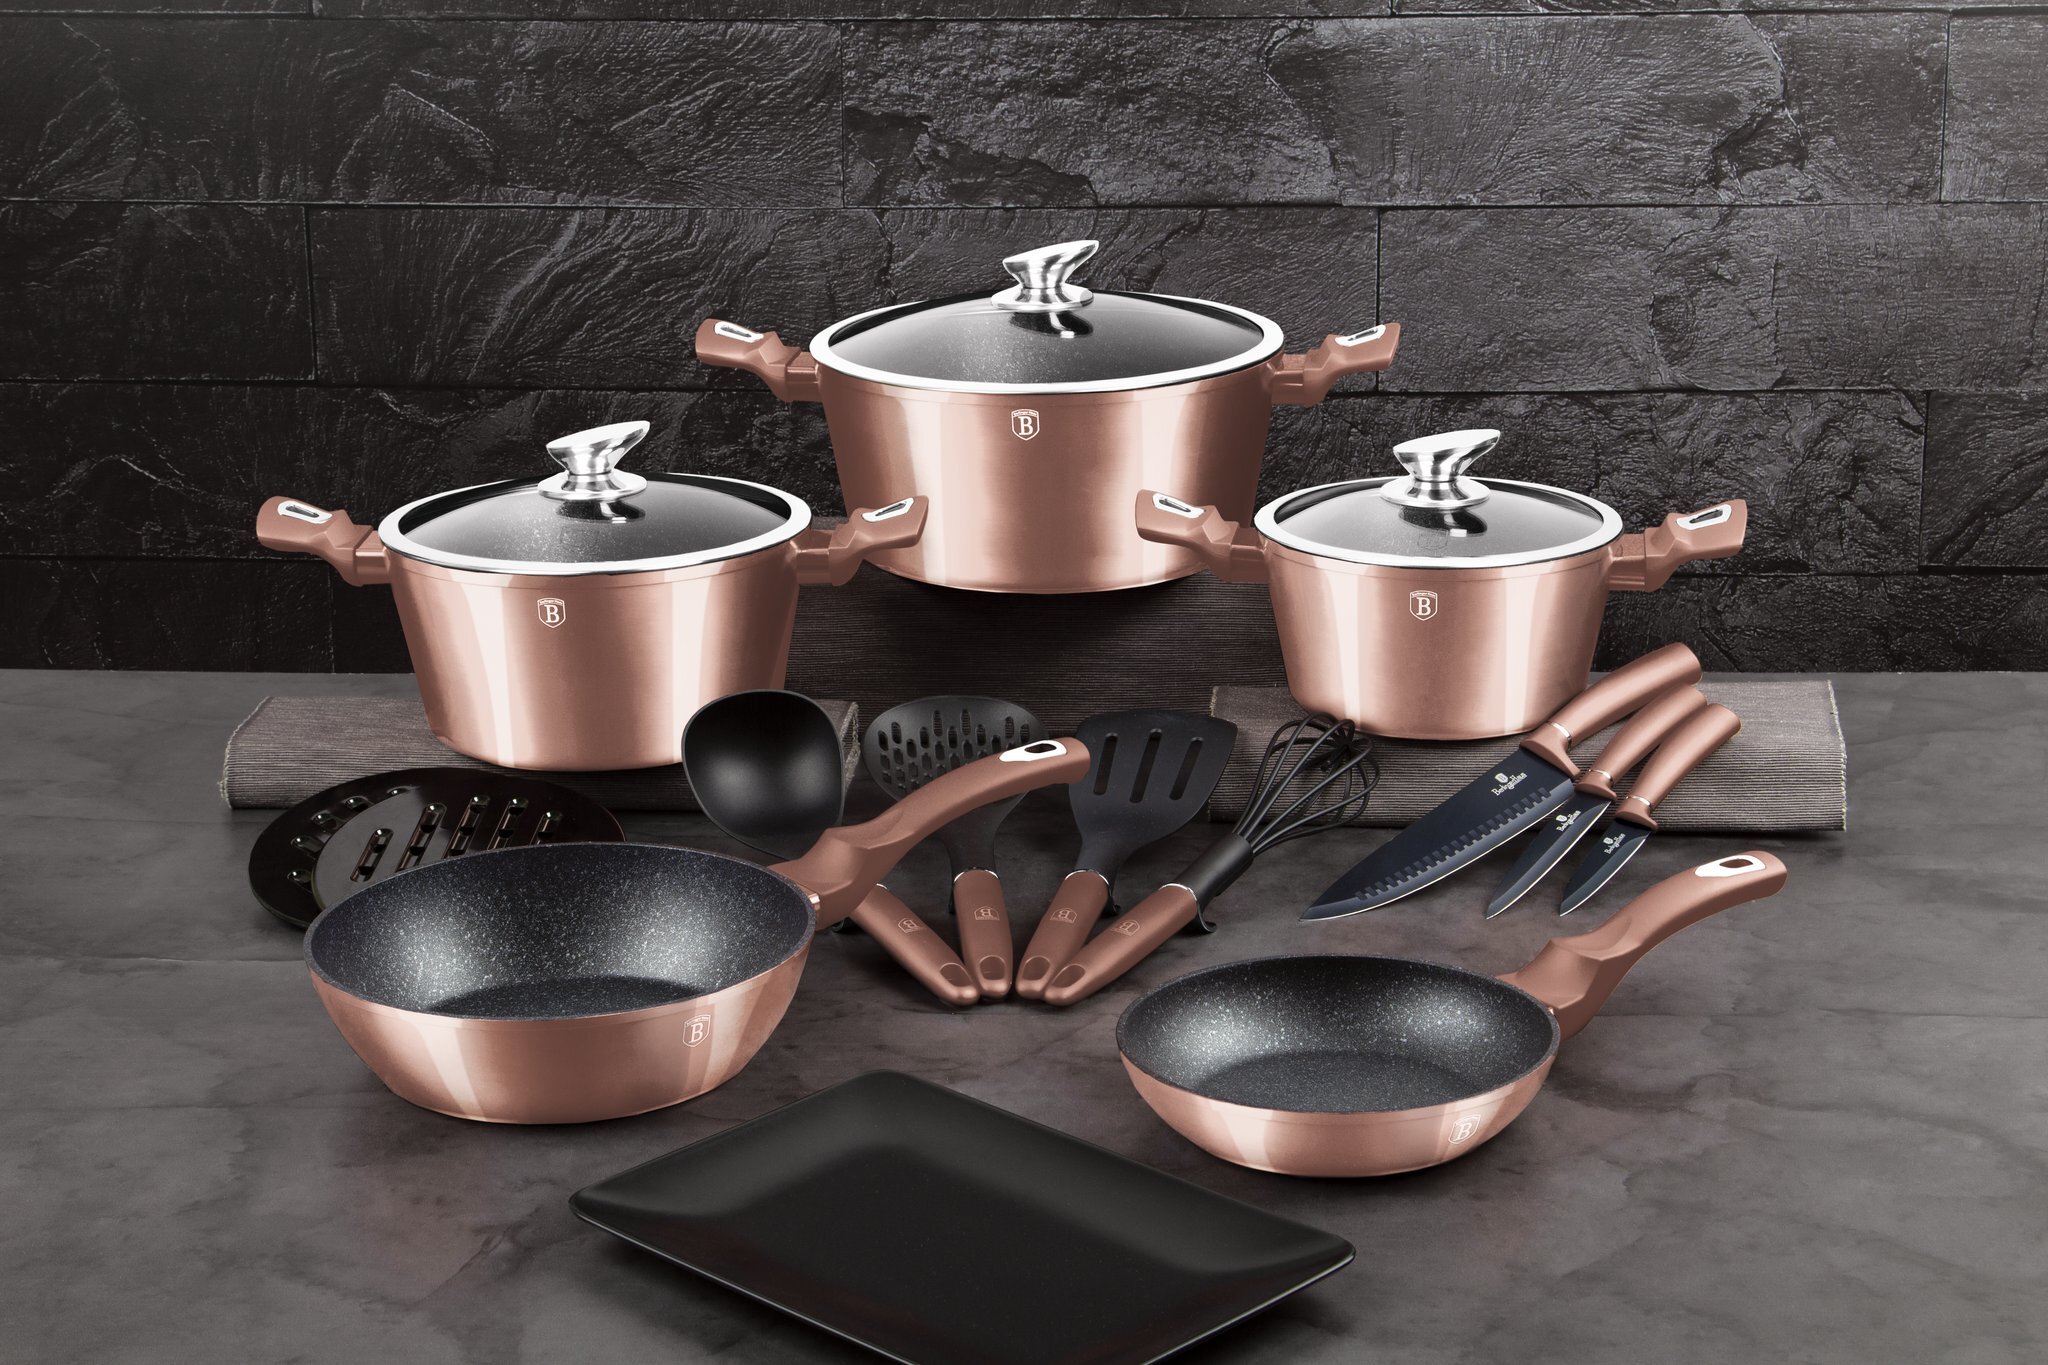 Home Basics Non-Stick Black Aluminum Cookware Set with Bakelite Handles, FOOD PREP